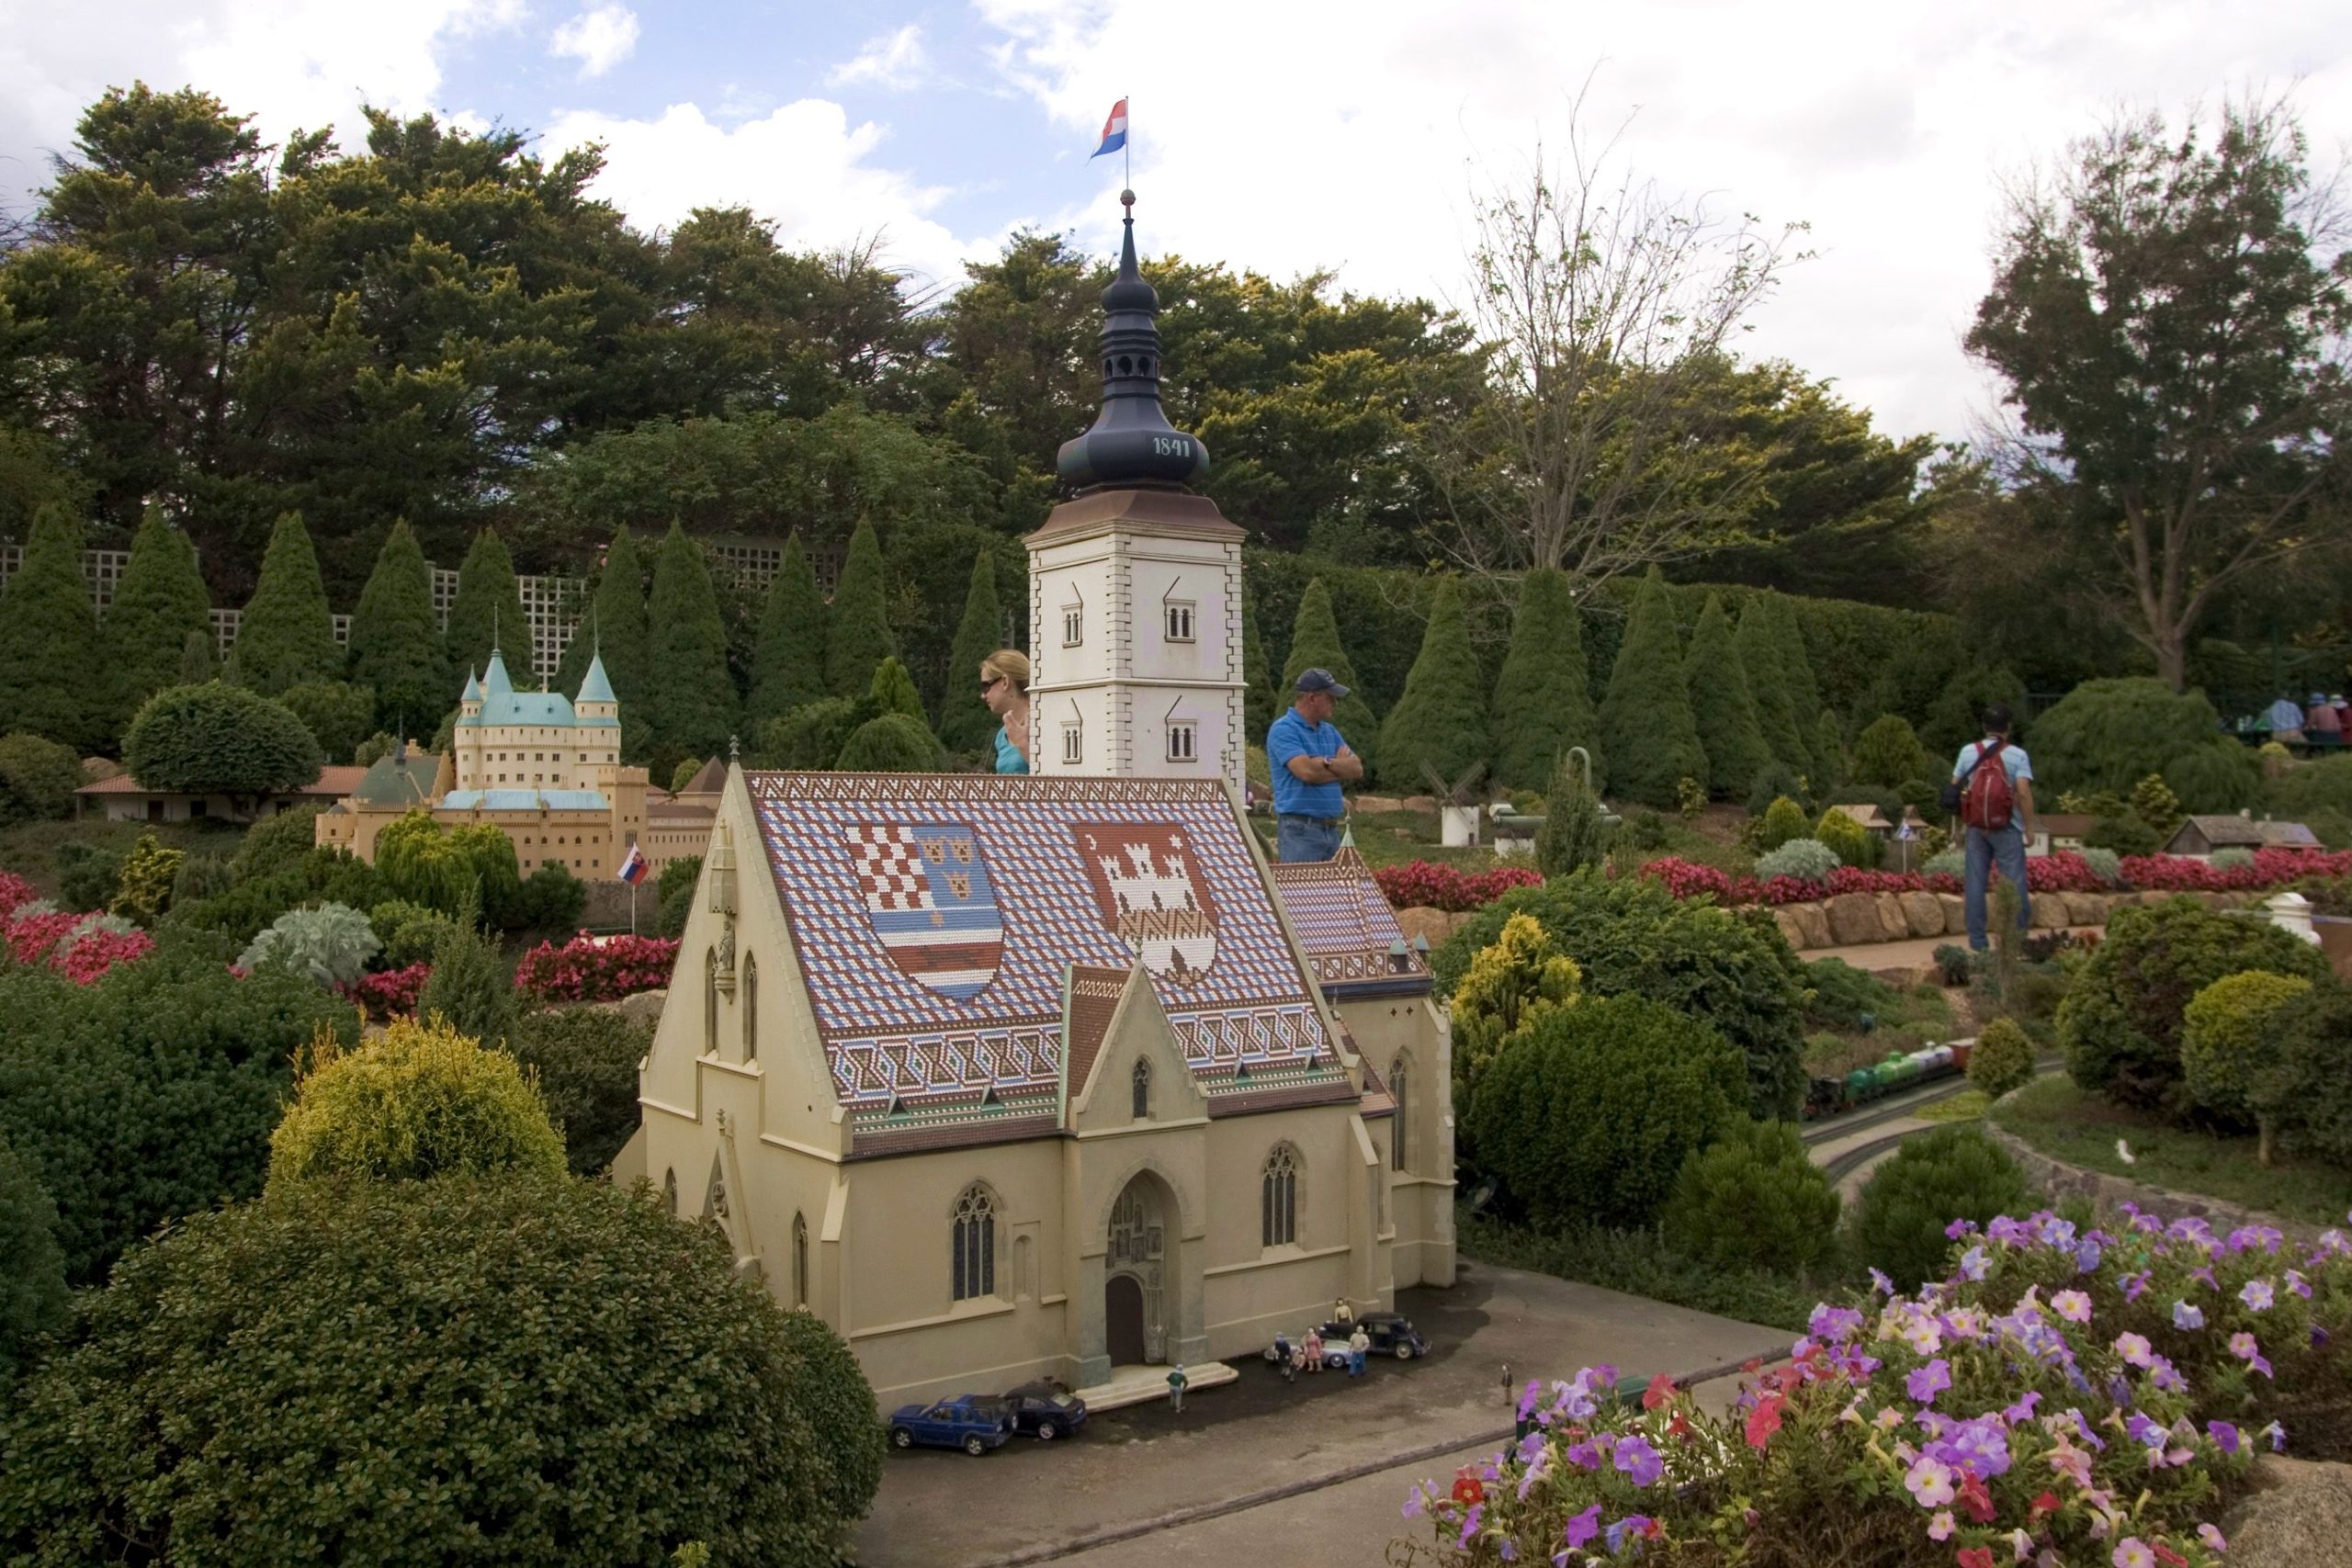 [PHOTO] Zagreb’s Famous St. Mark’s Church at Miniature Village in Australia